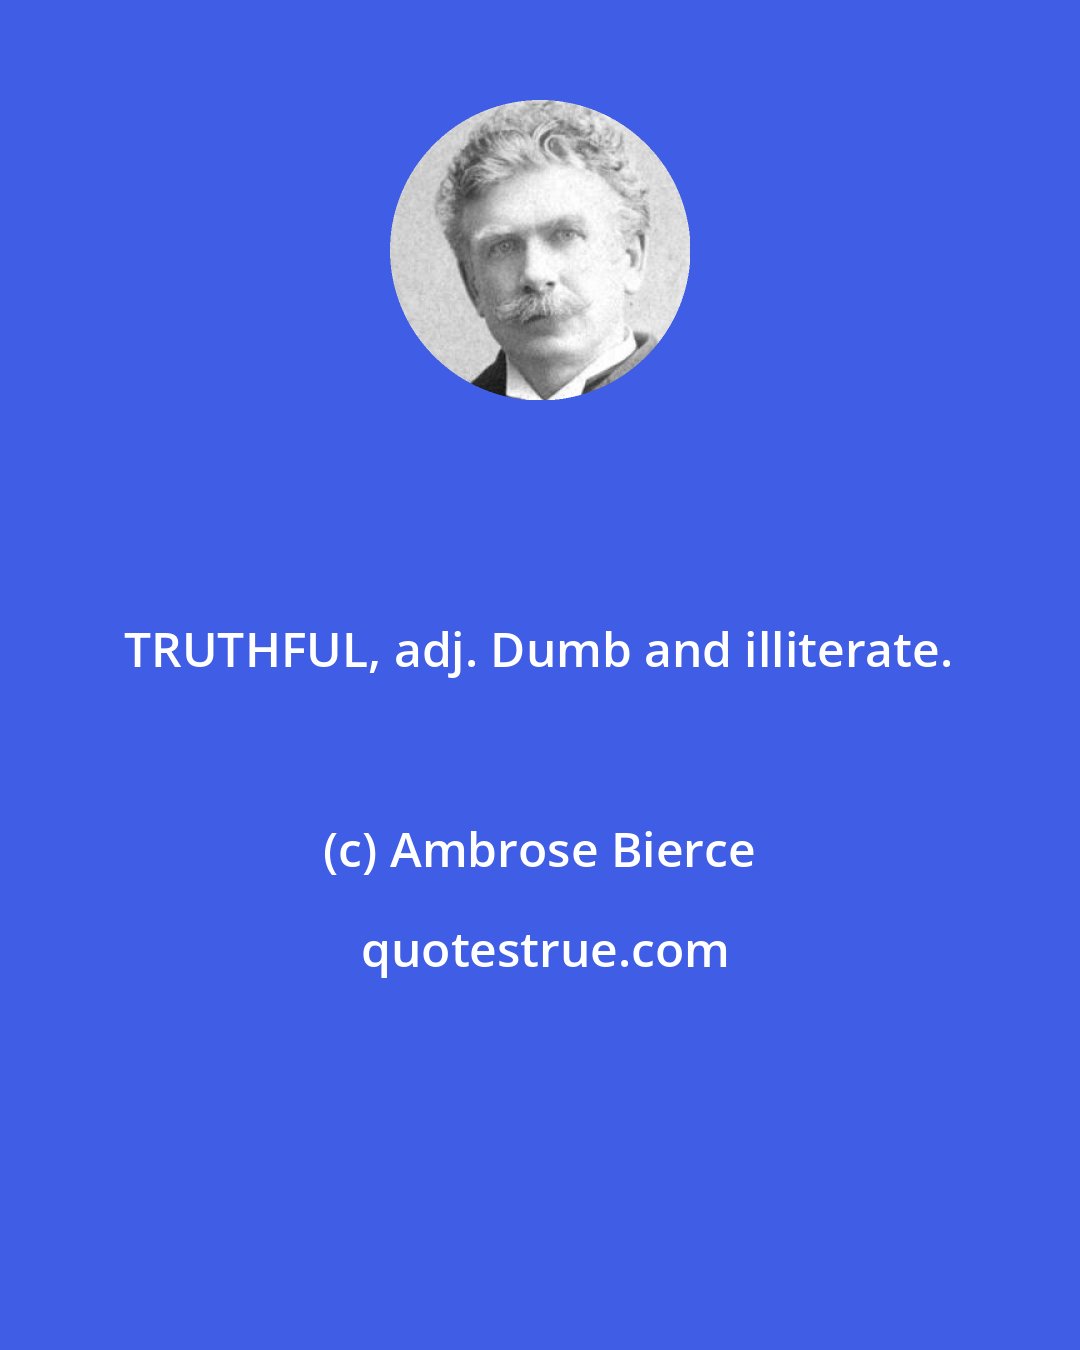 Ambrose Bierce: TRUTHFUL, adj. Dumb and illiterate.